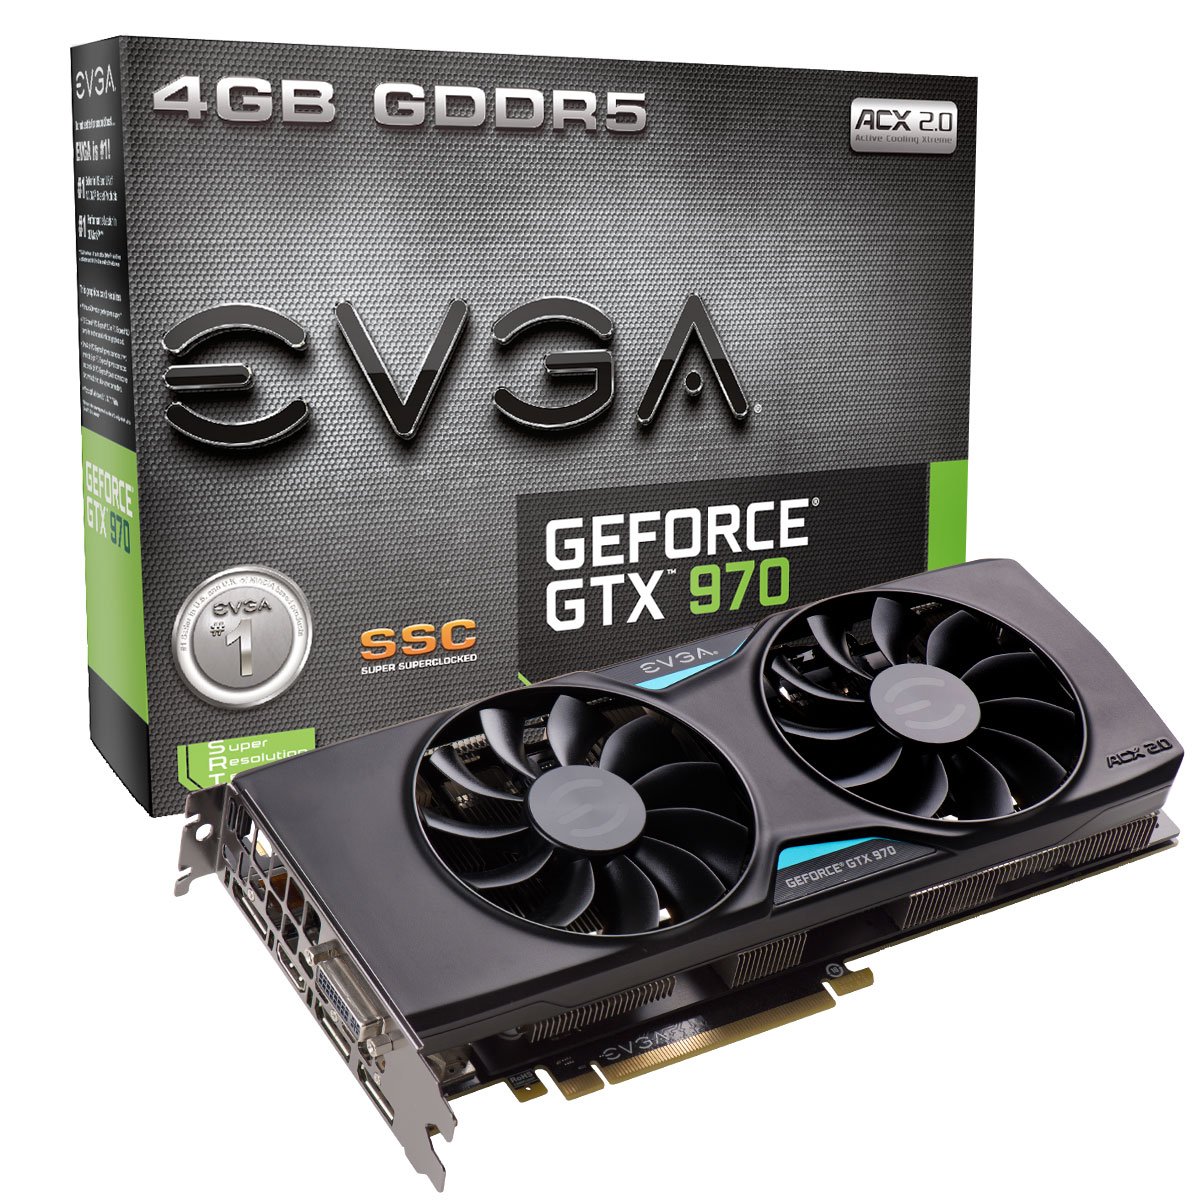 EVGA GeForce GTX 970 SSC ACX 2.0 4GB GDDR5 256bit DVI-I DVI-D HDMI DP SLI Ready Graphics Card 04G-P4-3975-KR 並行輸